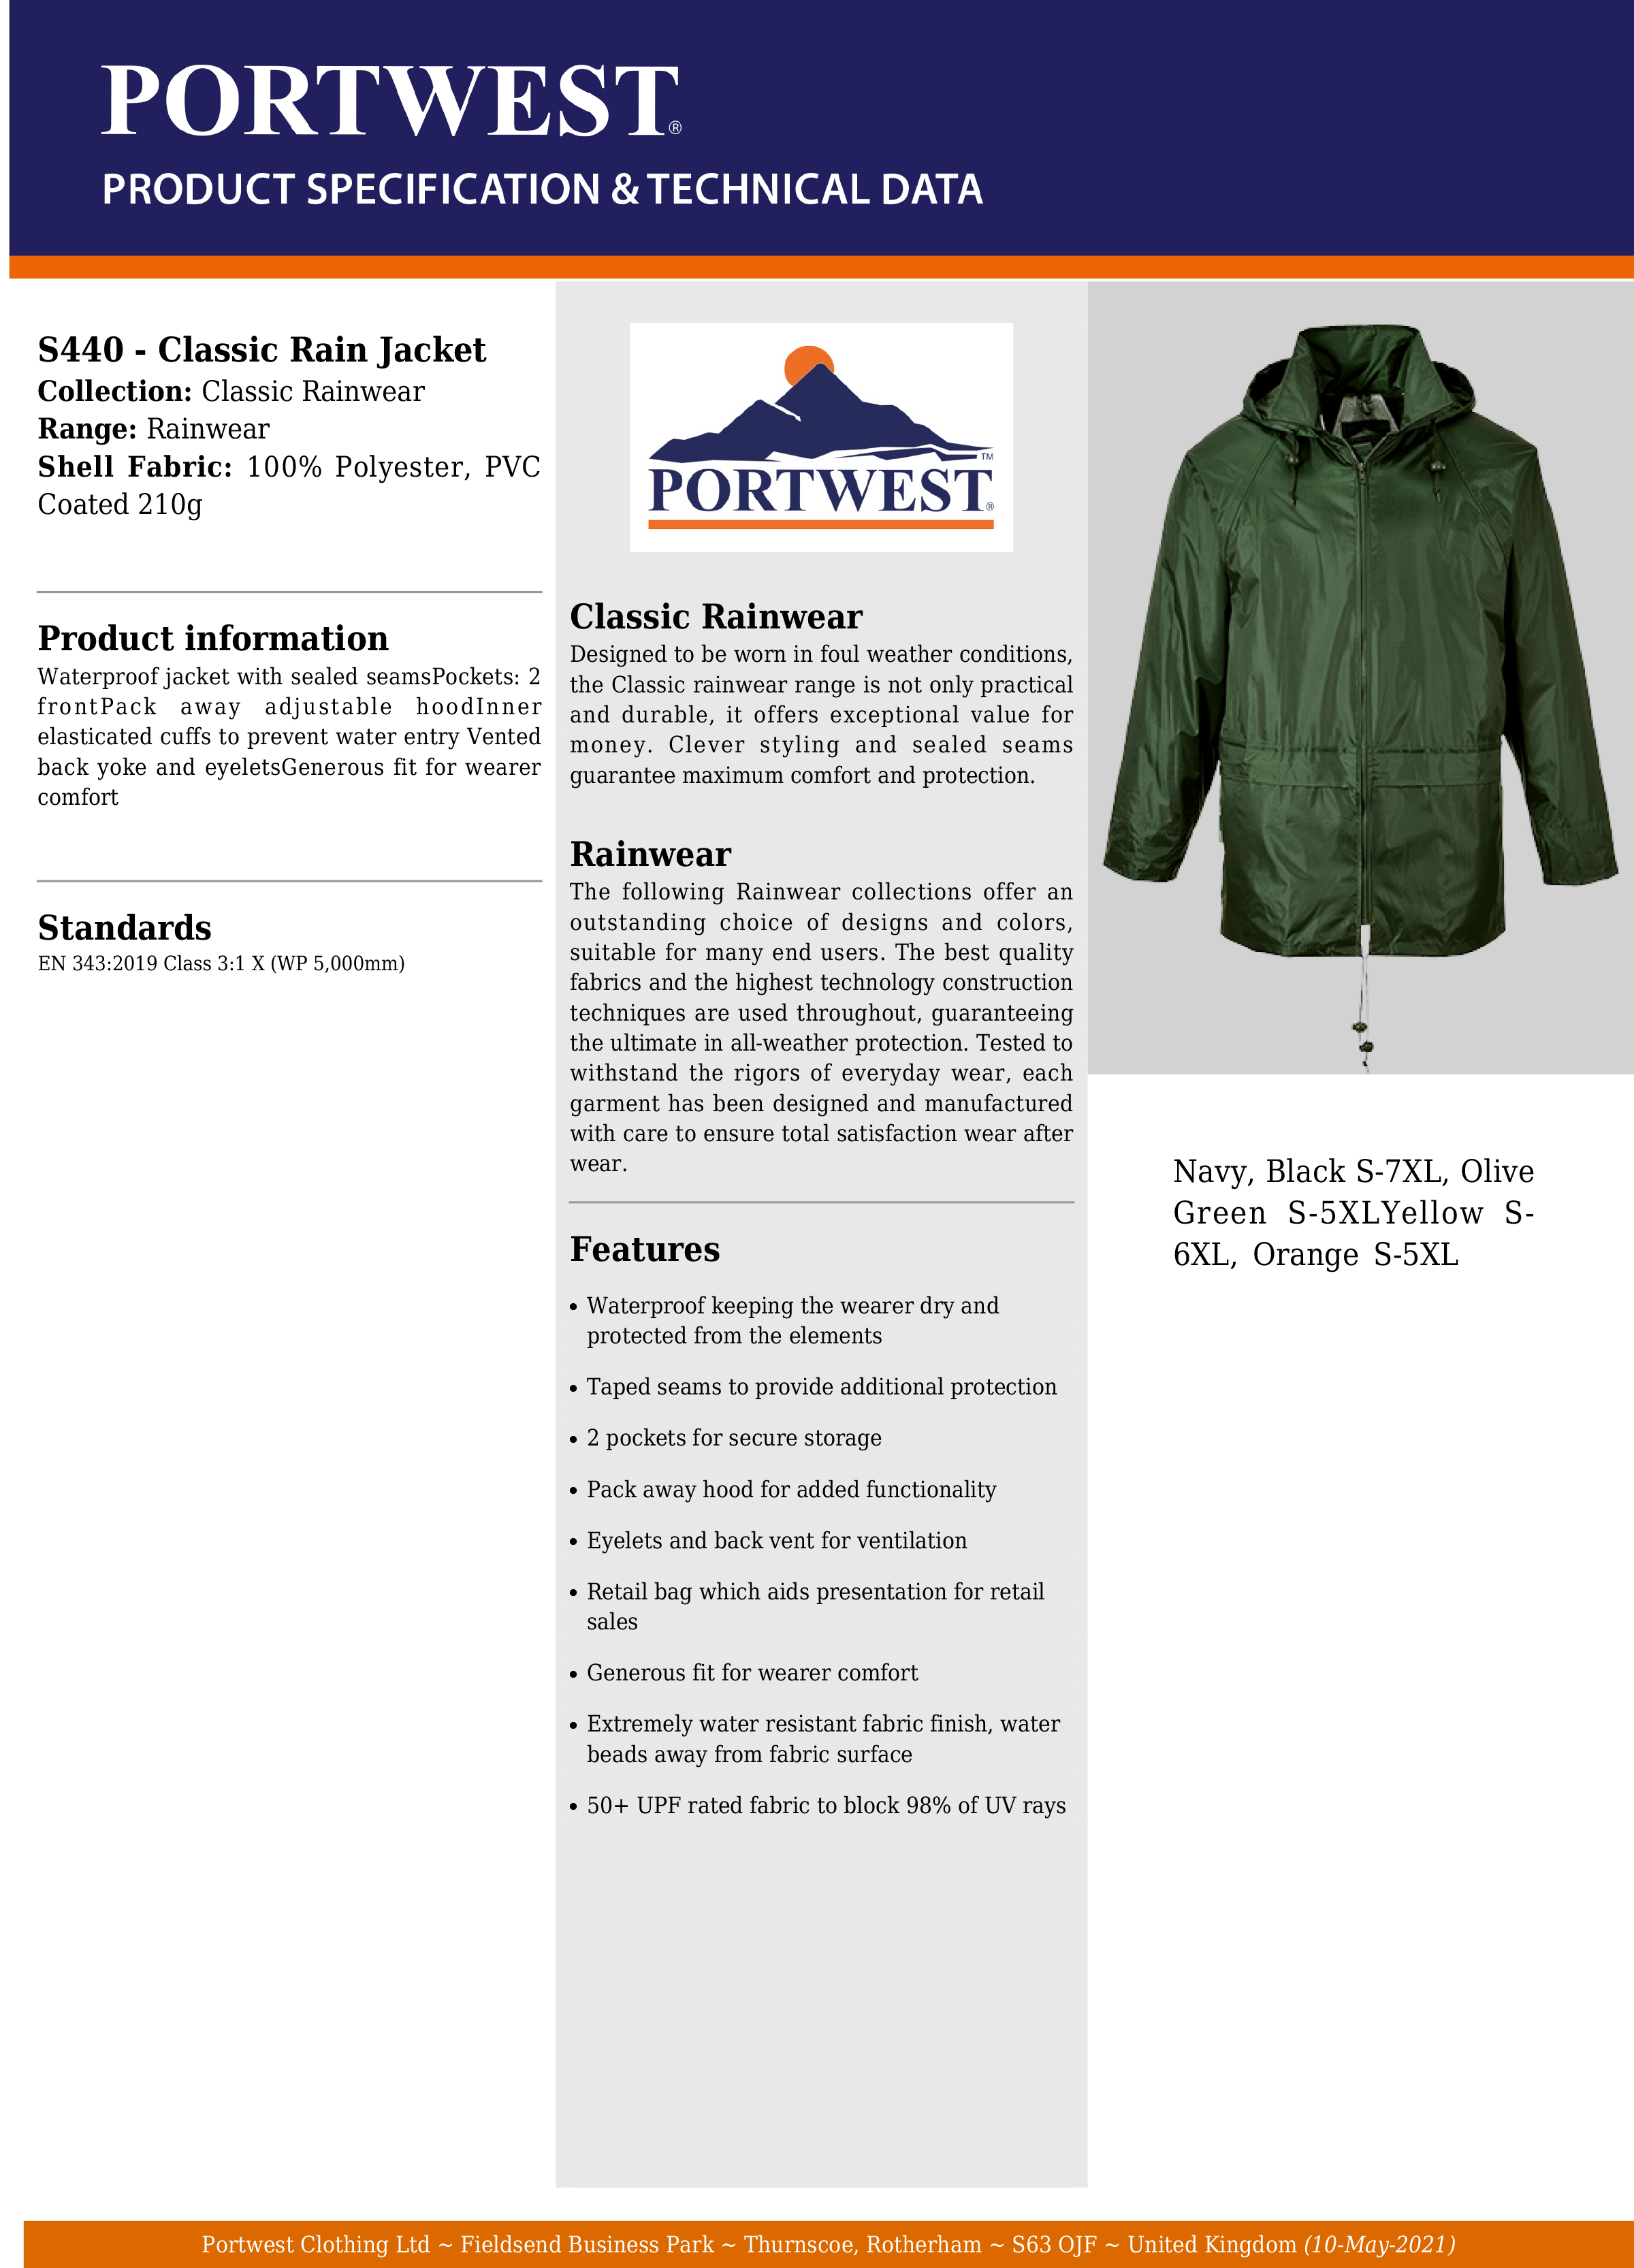 Portwest® Classic Rain Jacket - US440